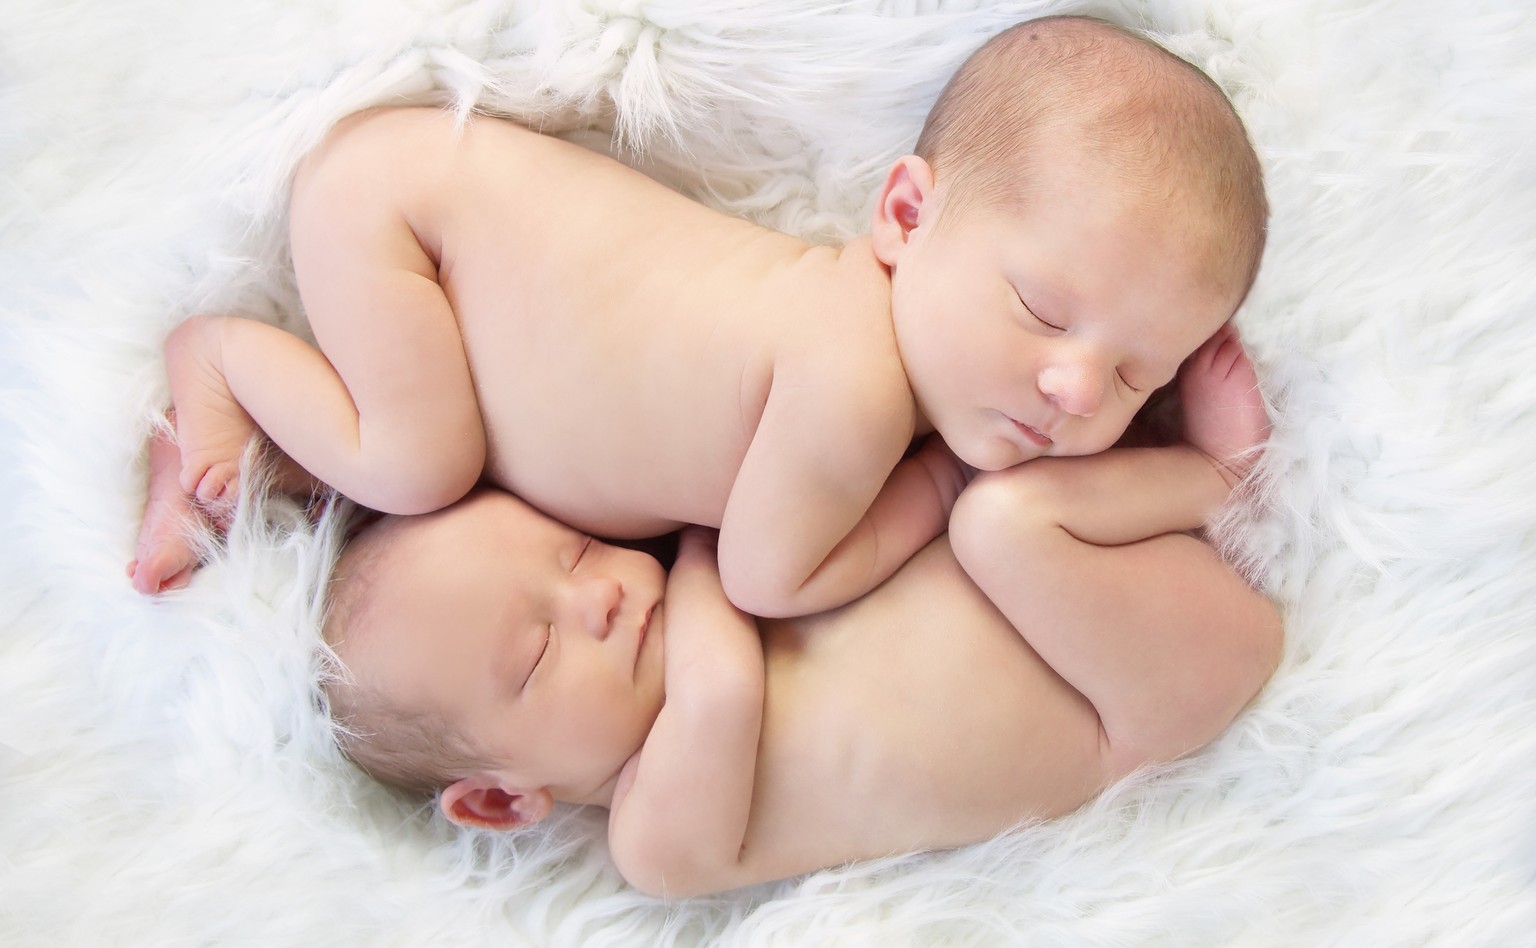 zwillinge twins babys säuglinge neugeborene shutterstock